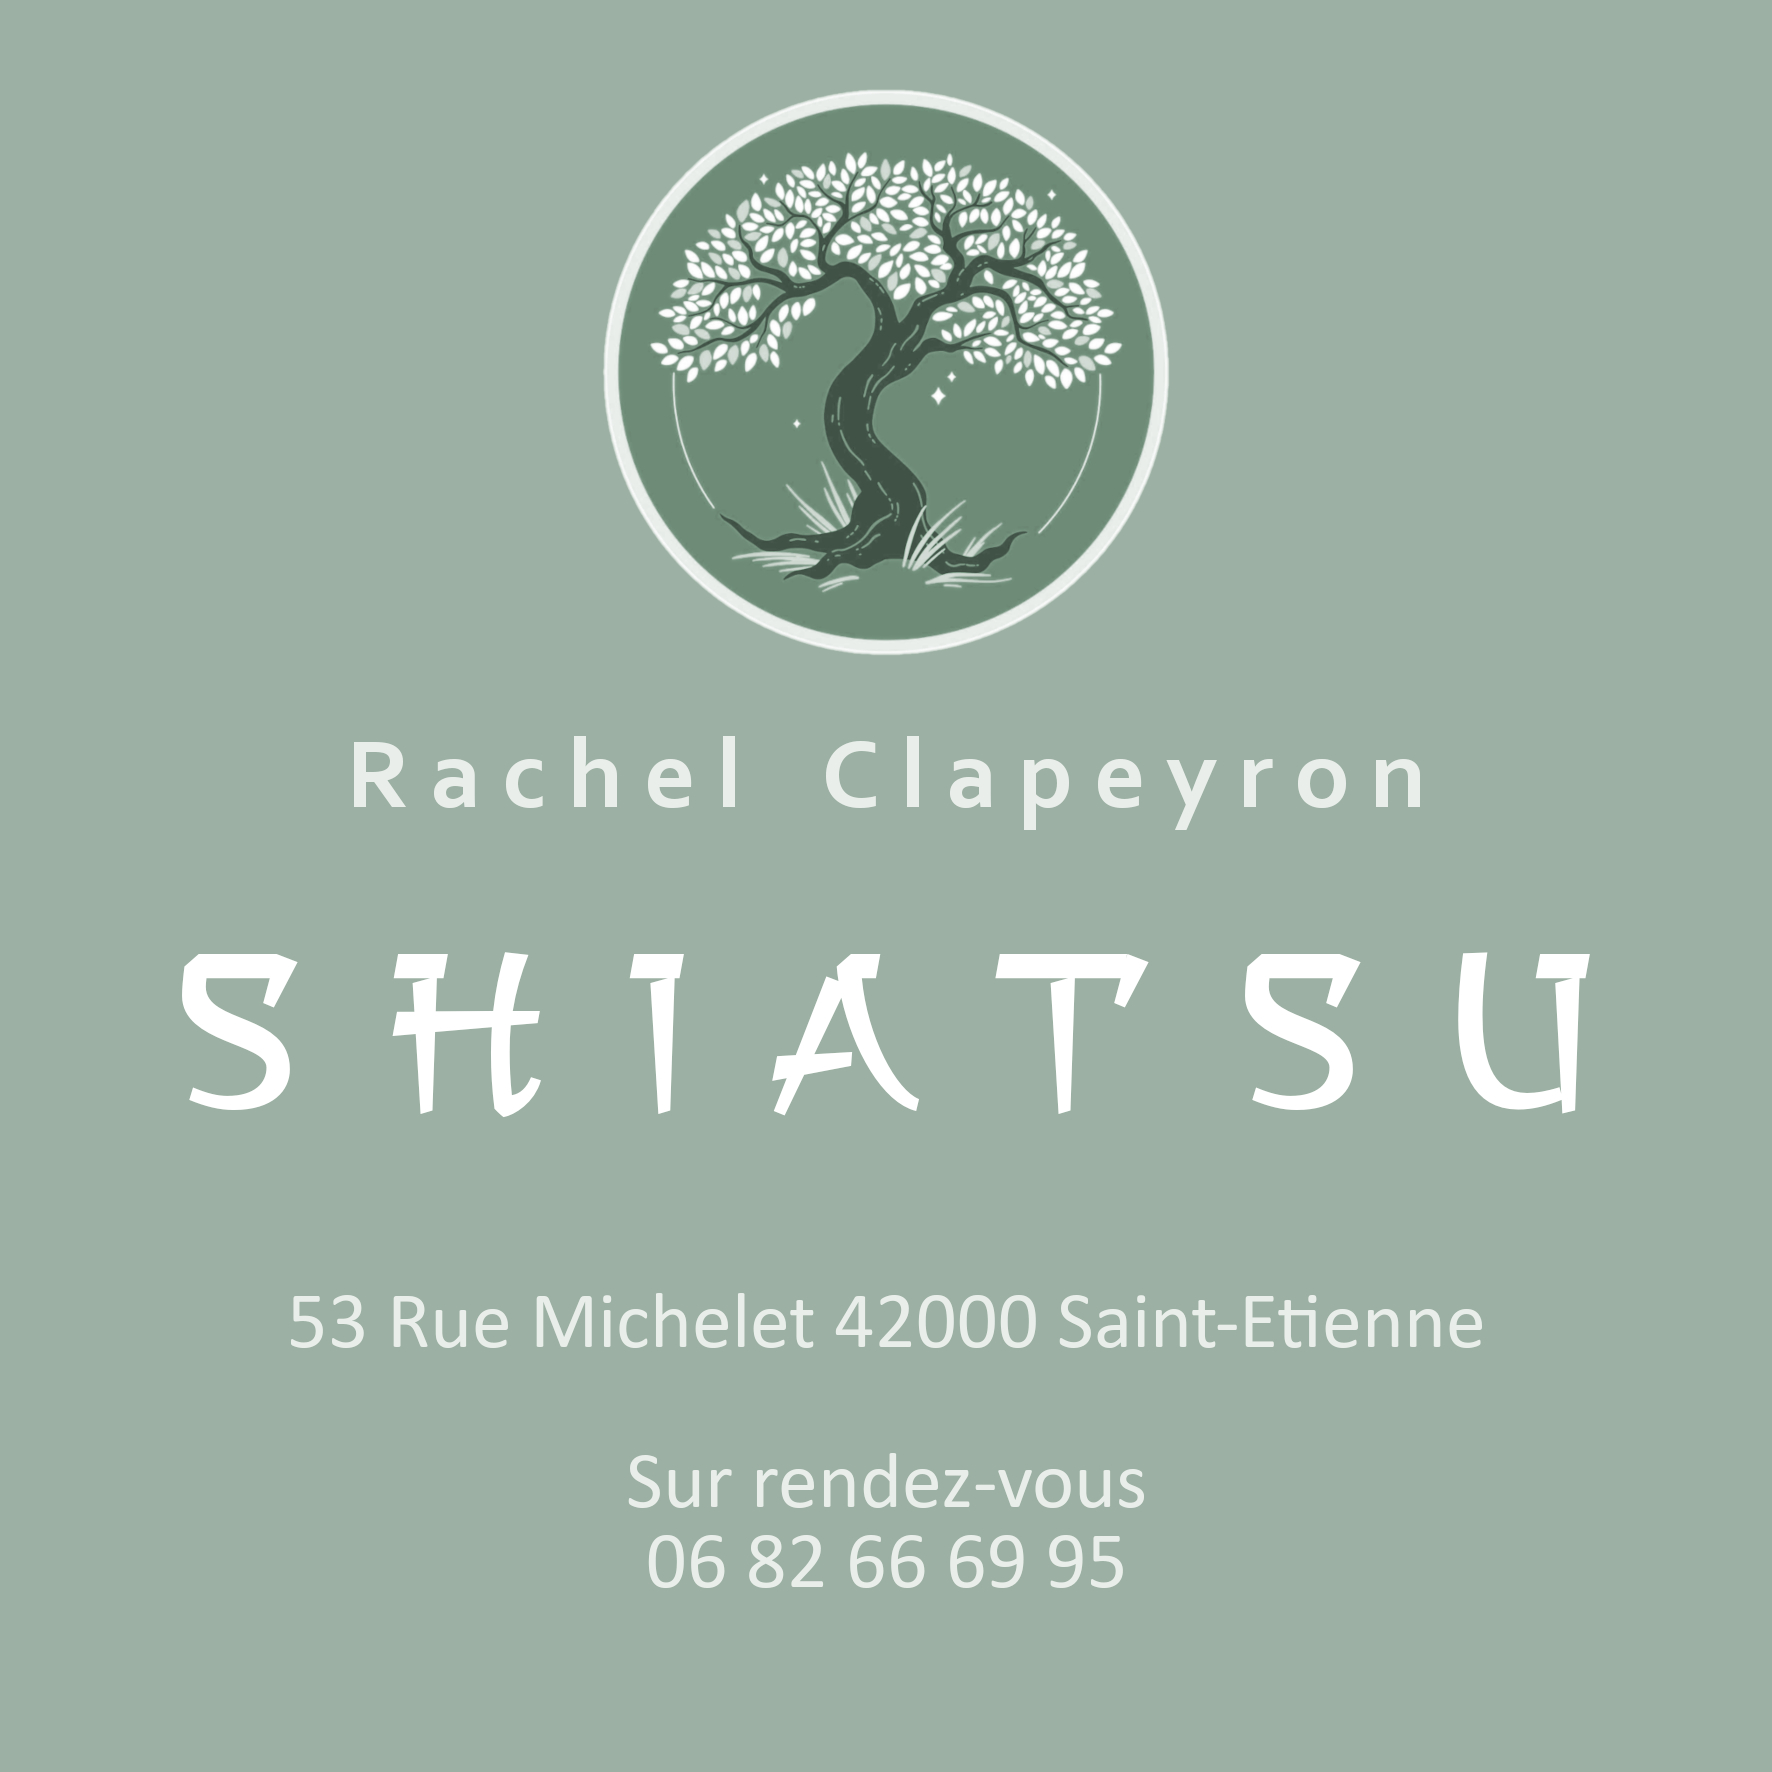 Rachel Clapeyron Shiatsu : infos, localisation, contacts... pour ce centre de shiatsu